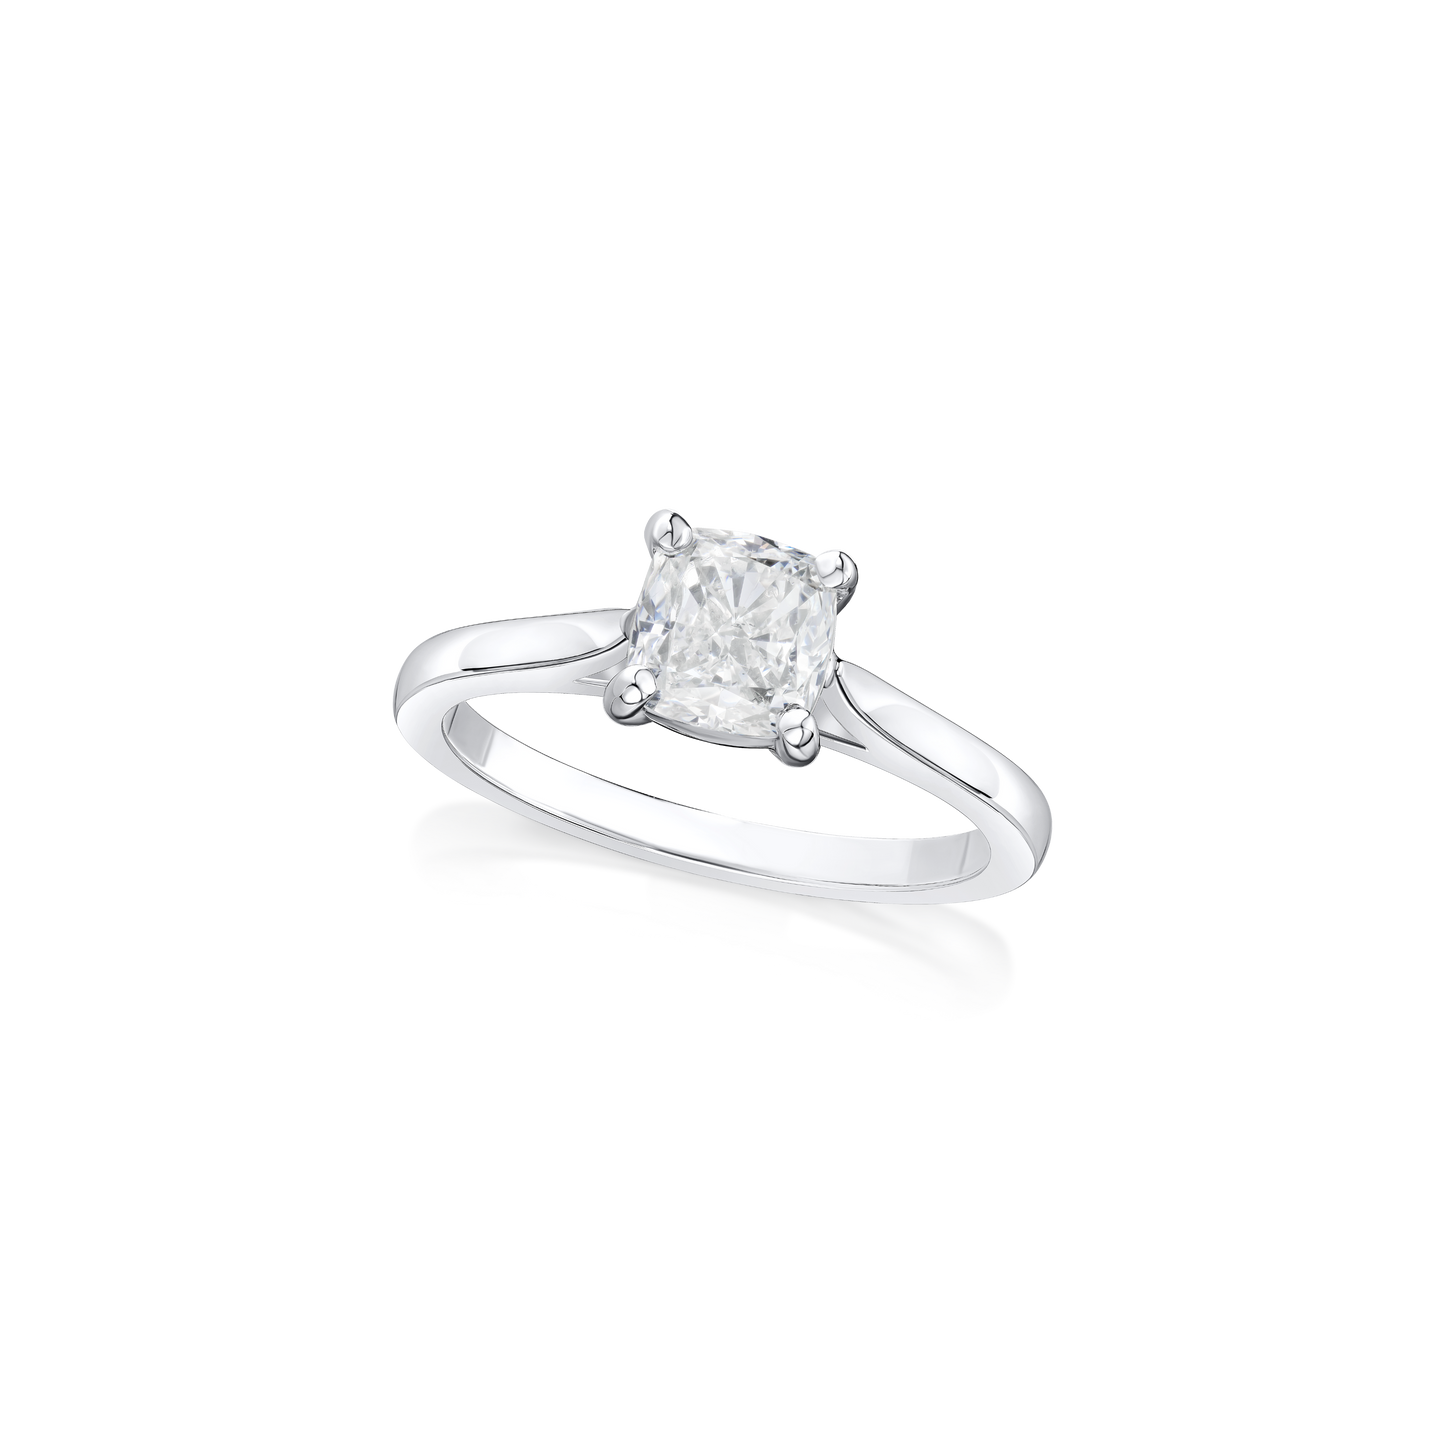 1.20cts Cushion-Cut Diamond Solitaire Ring